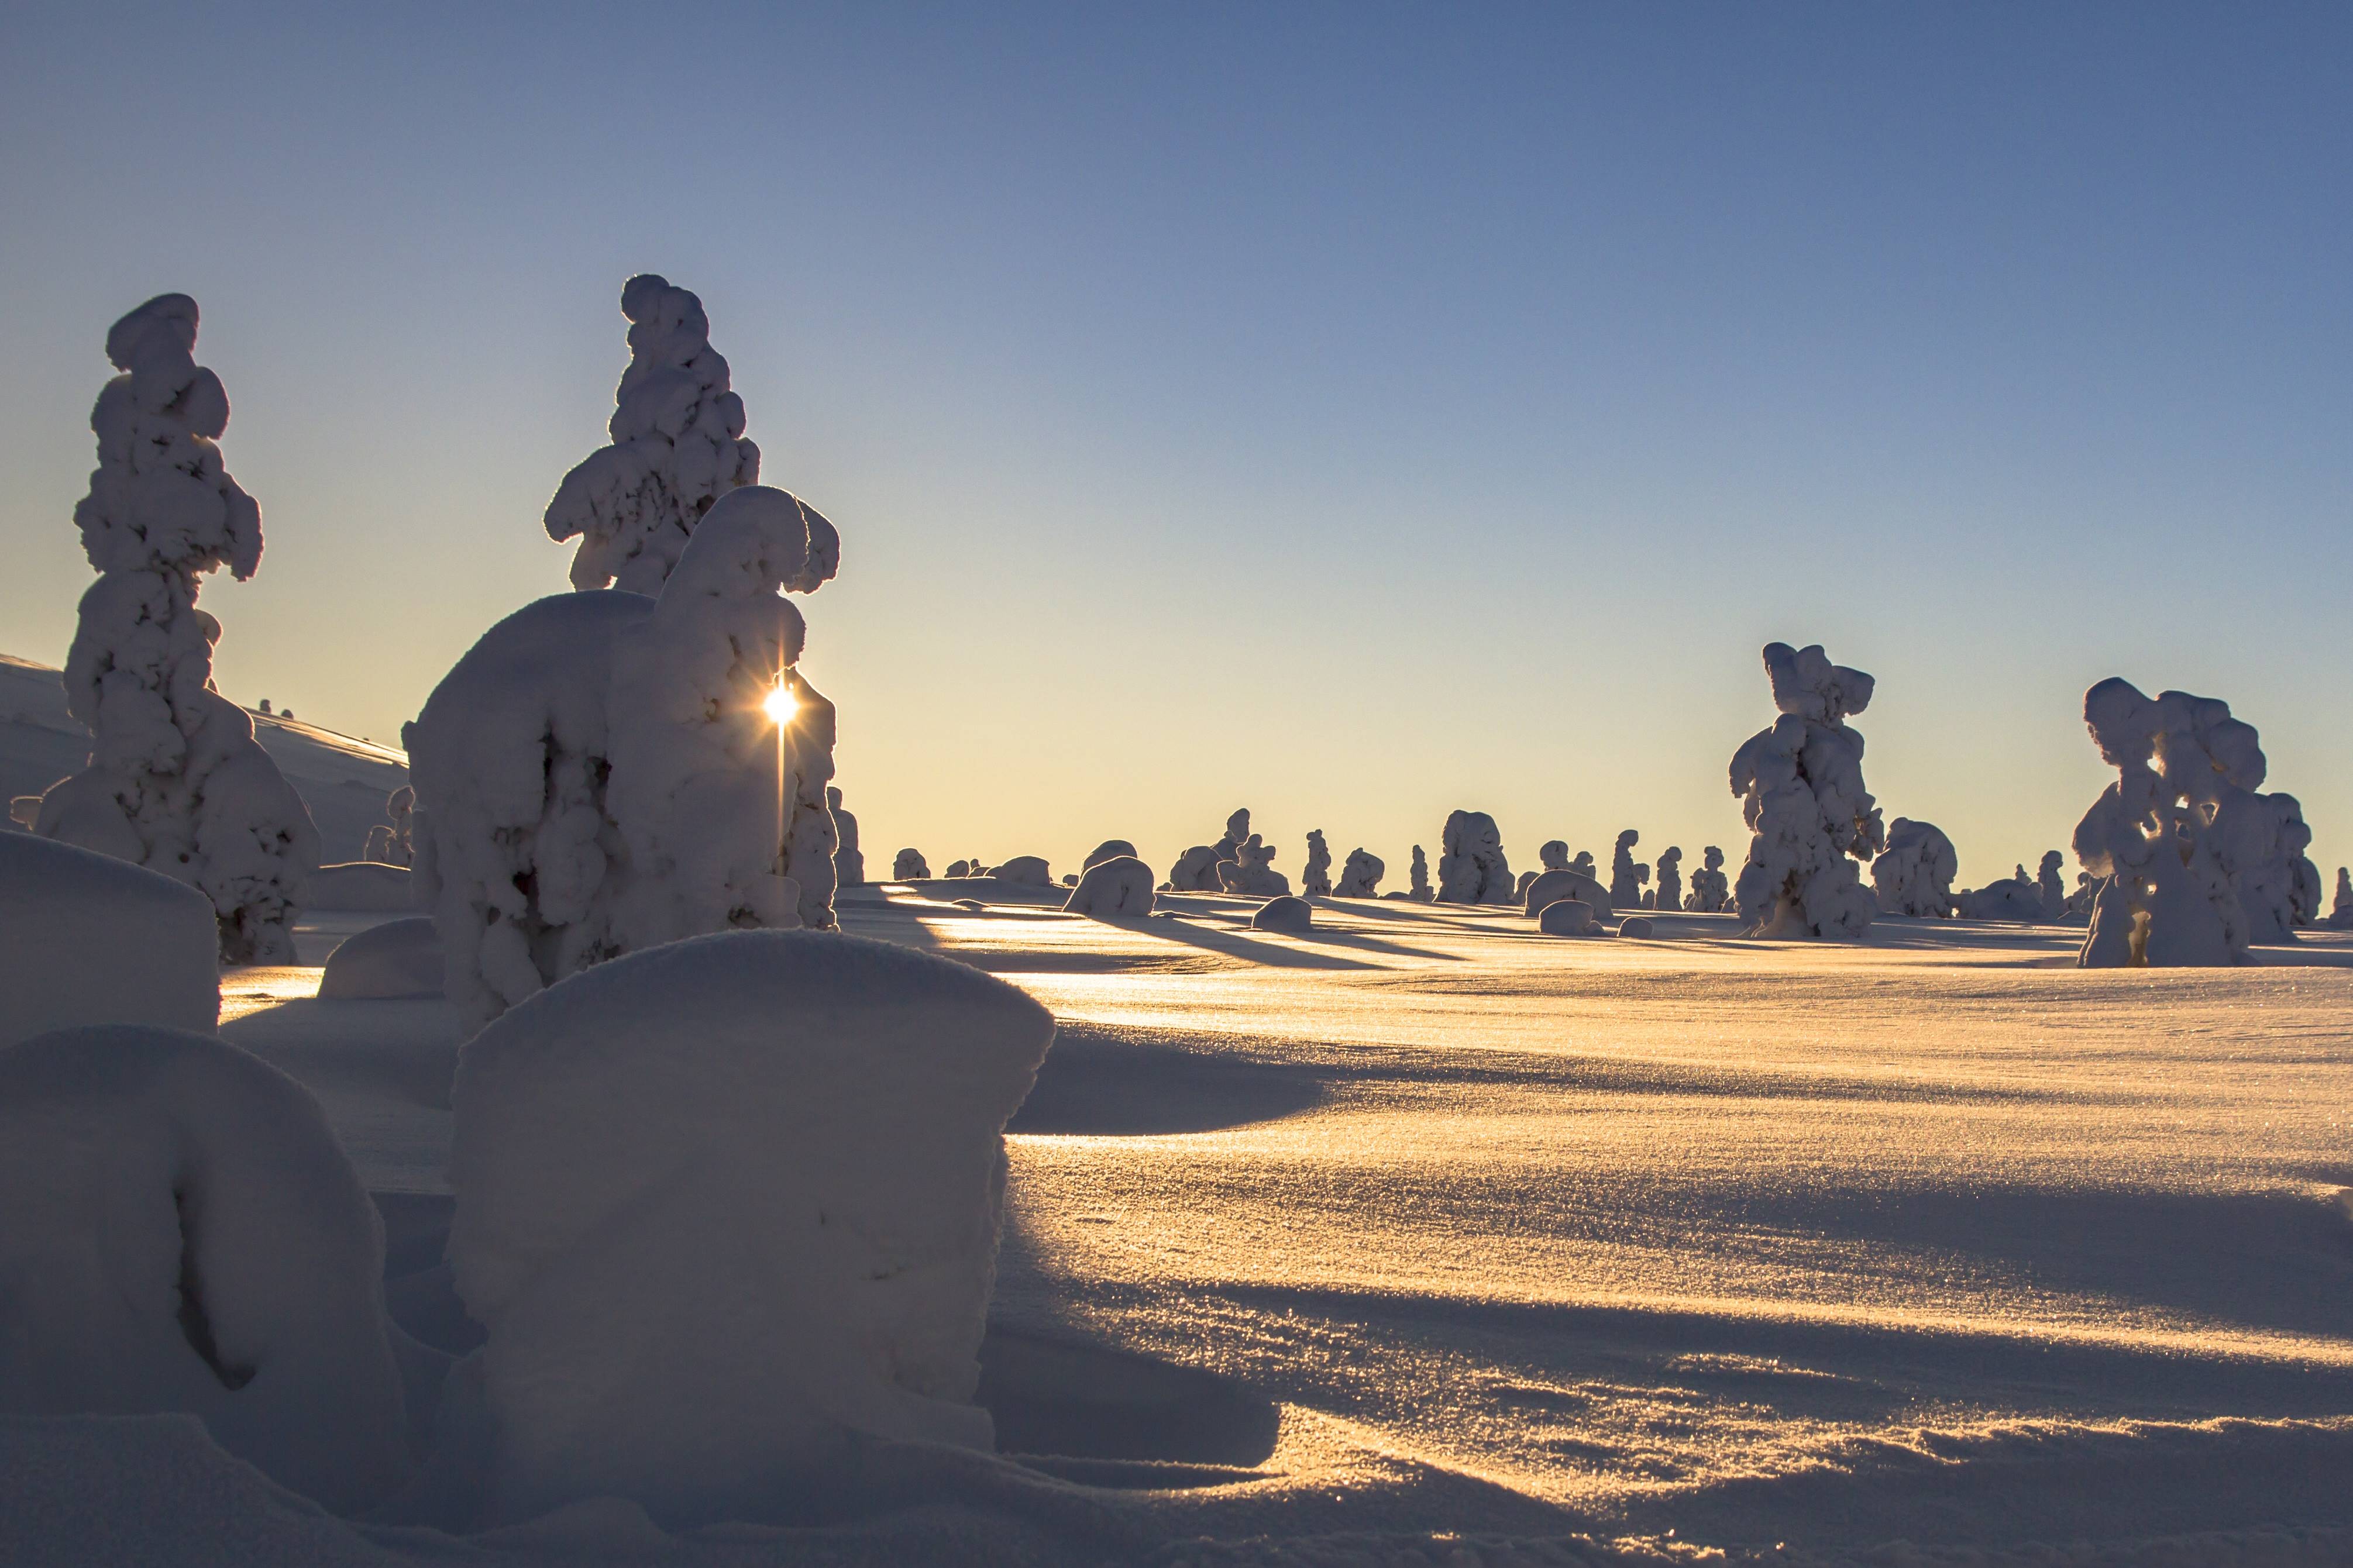 #finland, #winter, #snow, #wintry, #landscape, #cold